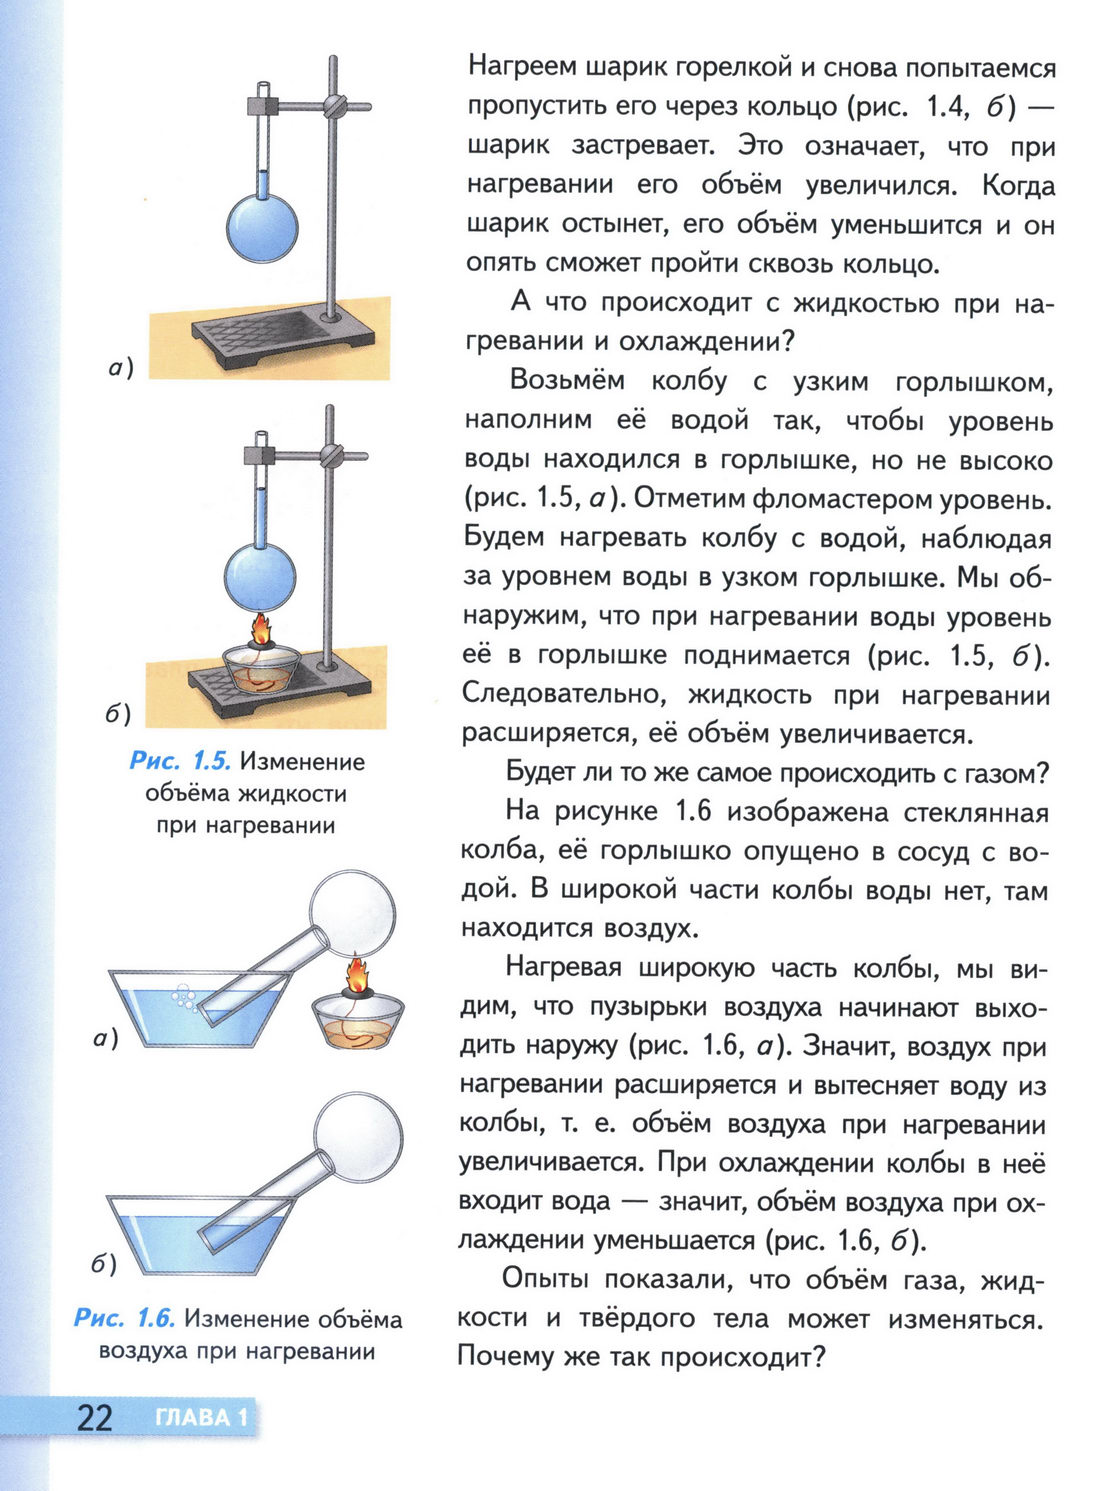 стр 22 учебник физики 7 класс параграф 7